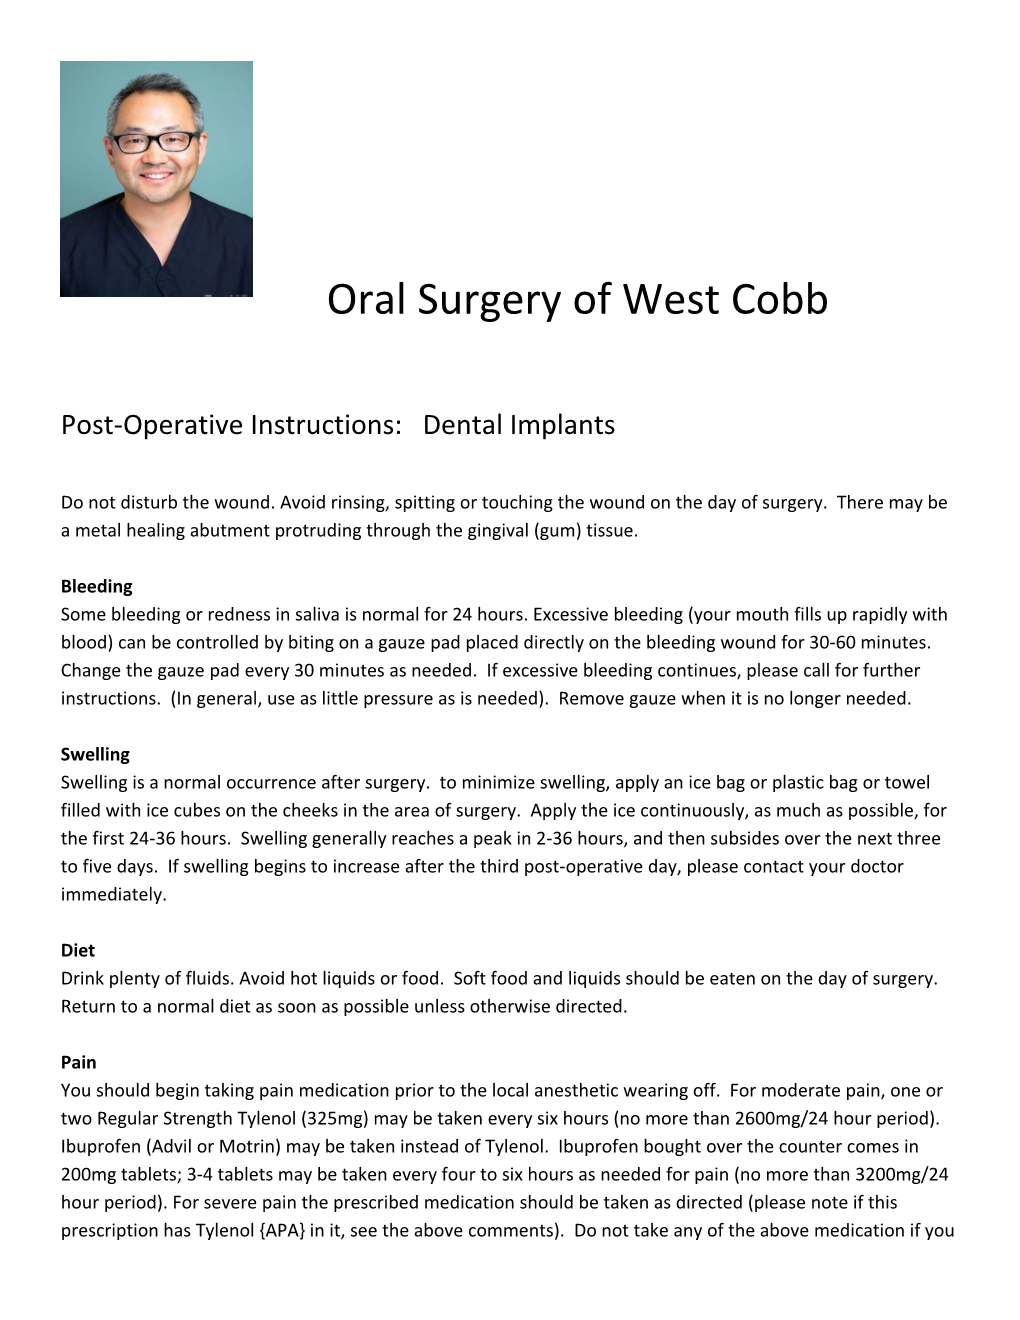 Post-Operative Instructions: Dental Implants